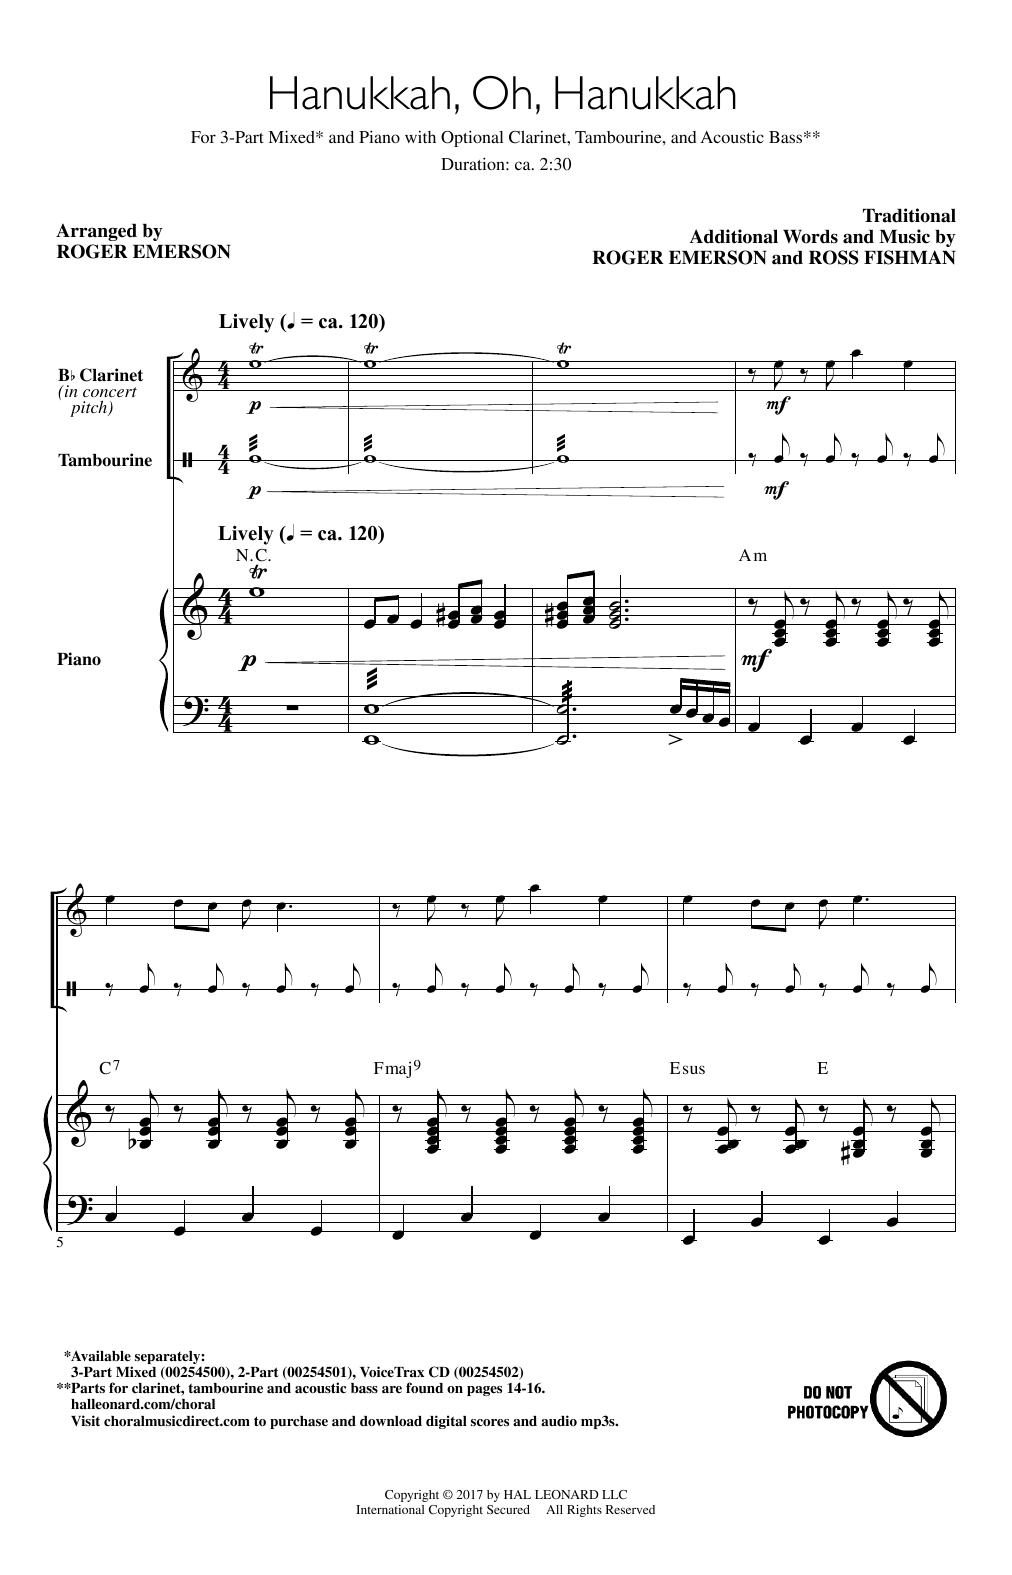 Roger Emerson Hanukkah, Oh, Hanukkah Sheet Music Notes & Chords for 3-Part Mixed - Download or Print PDF